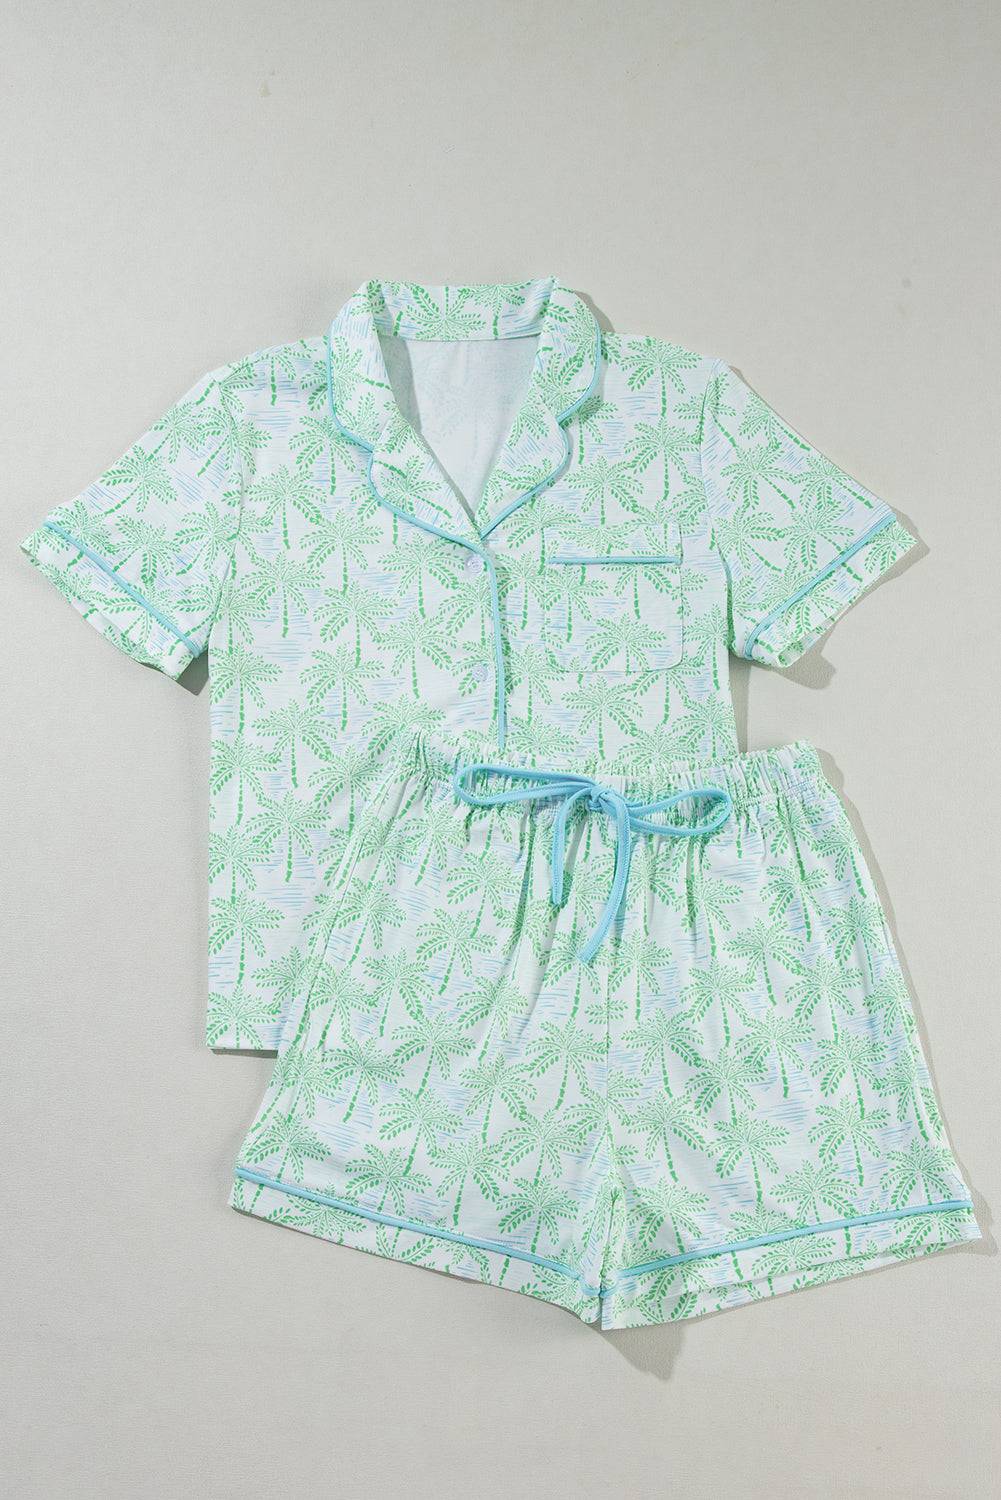 a boy's pajama set with a green leaf print